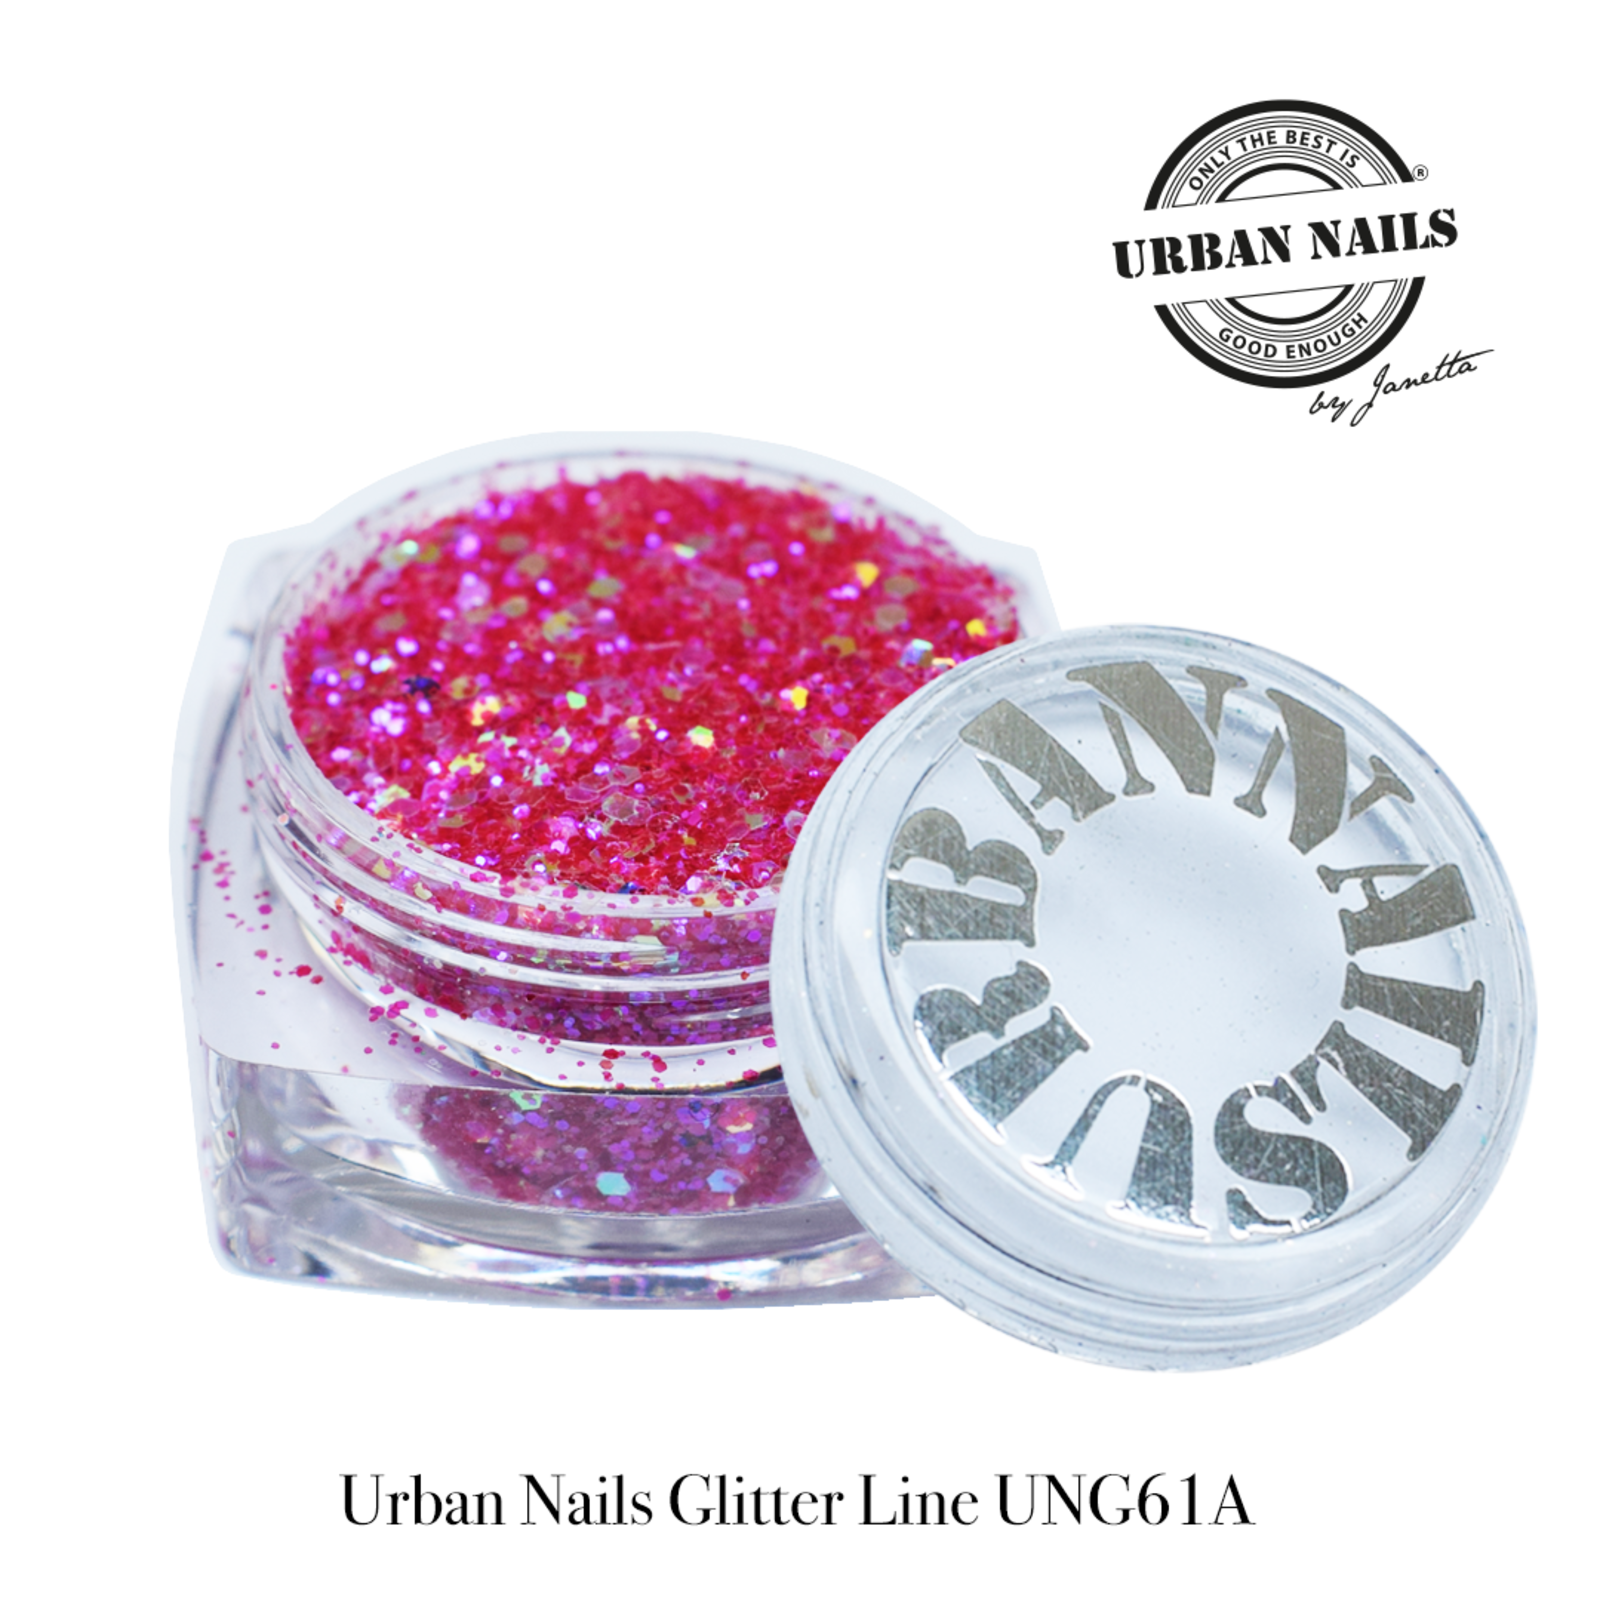 Urban nails Glitter Line UNG61-A